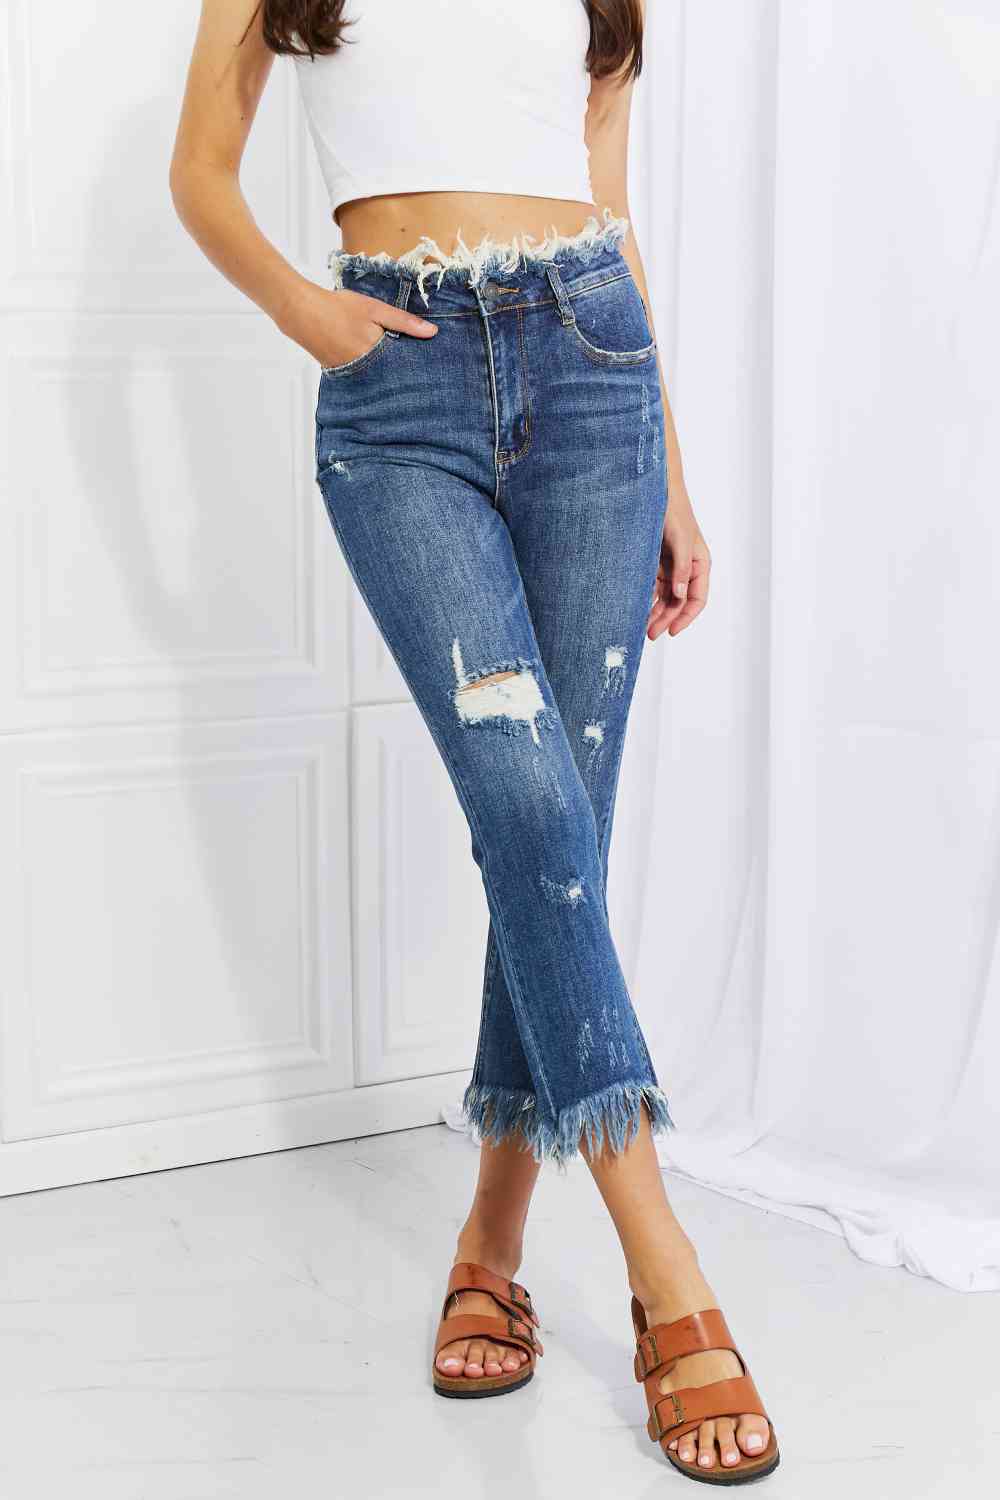 Light Gray RISEN Full Size Undone Chic Straight Leg Jeans Sentient Beauty Fashions Apparel & Accessories